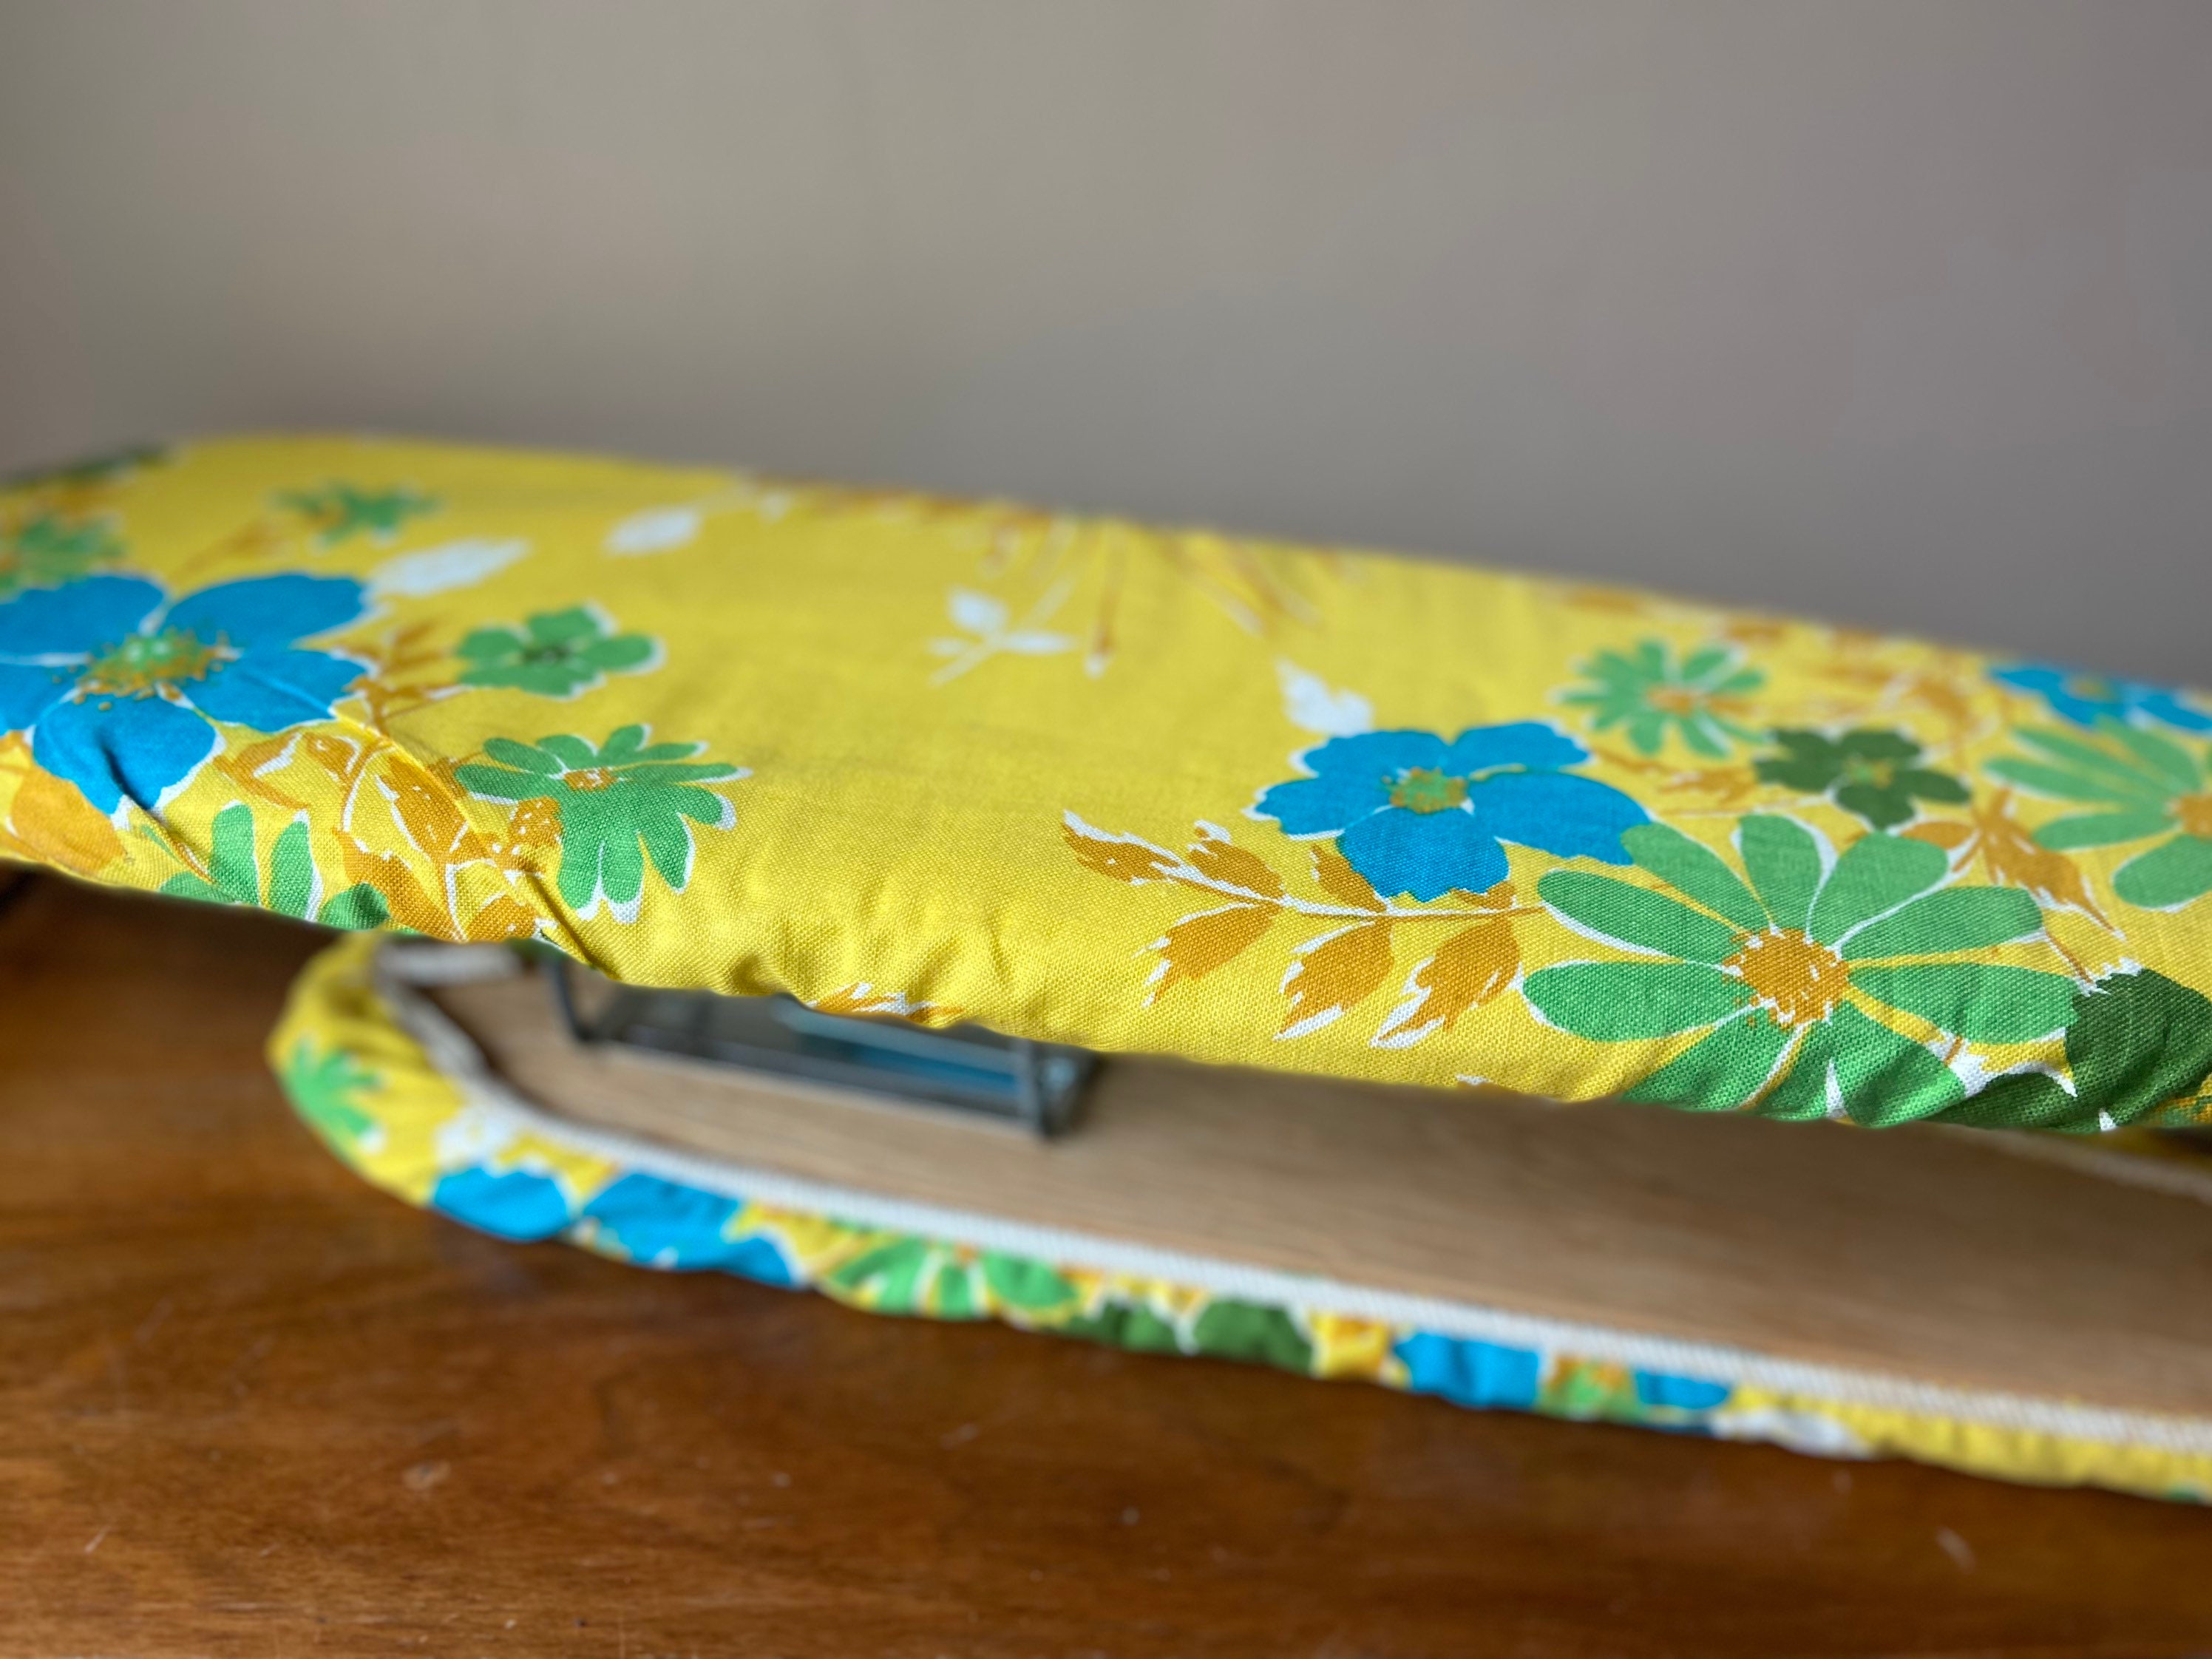 1pc Mini Ironing Sleeve Rack Folding Ironing Board Ironing Tool for Home, Size: 26x11x8CM